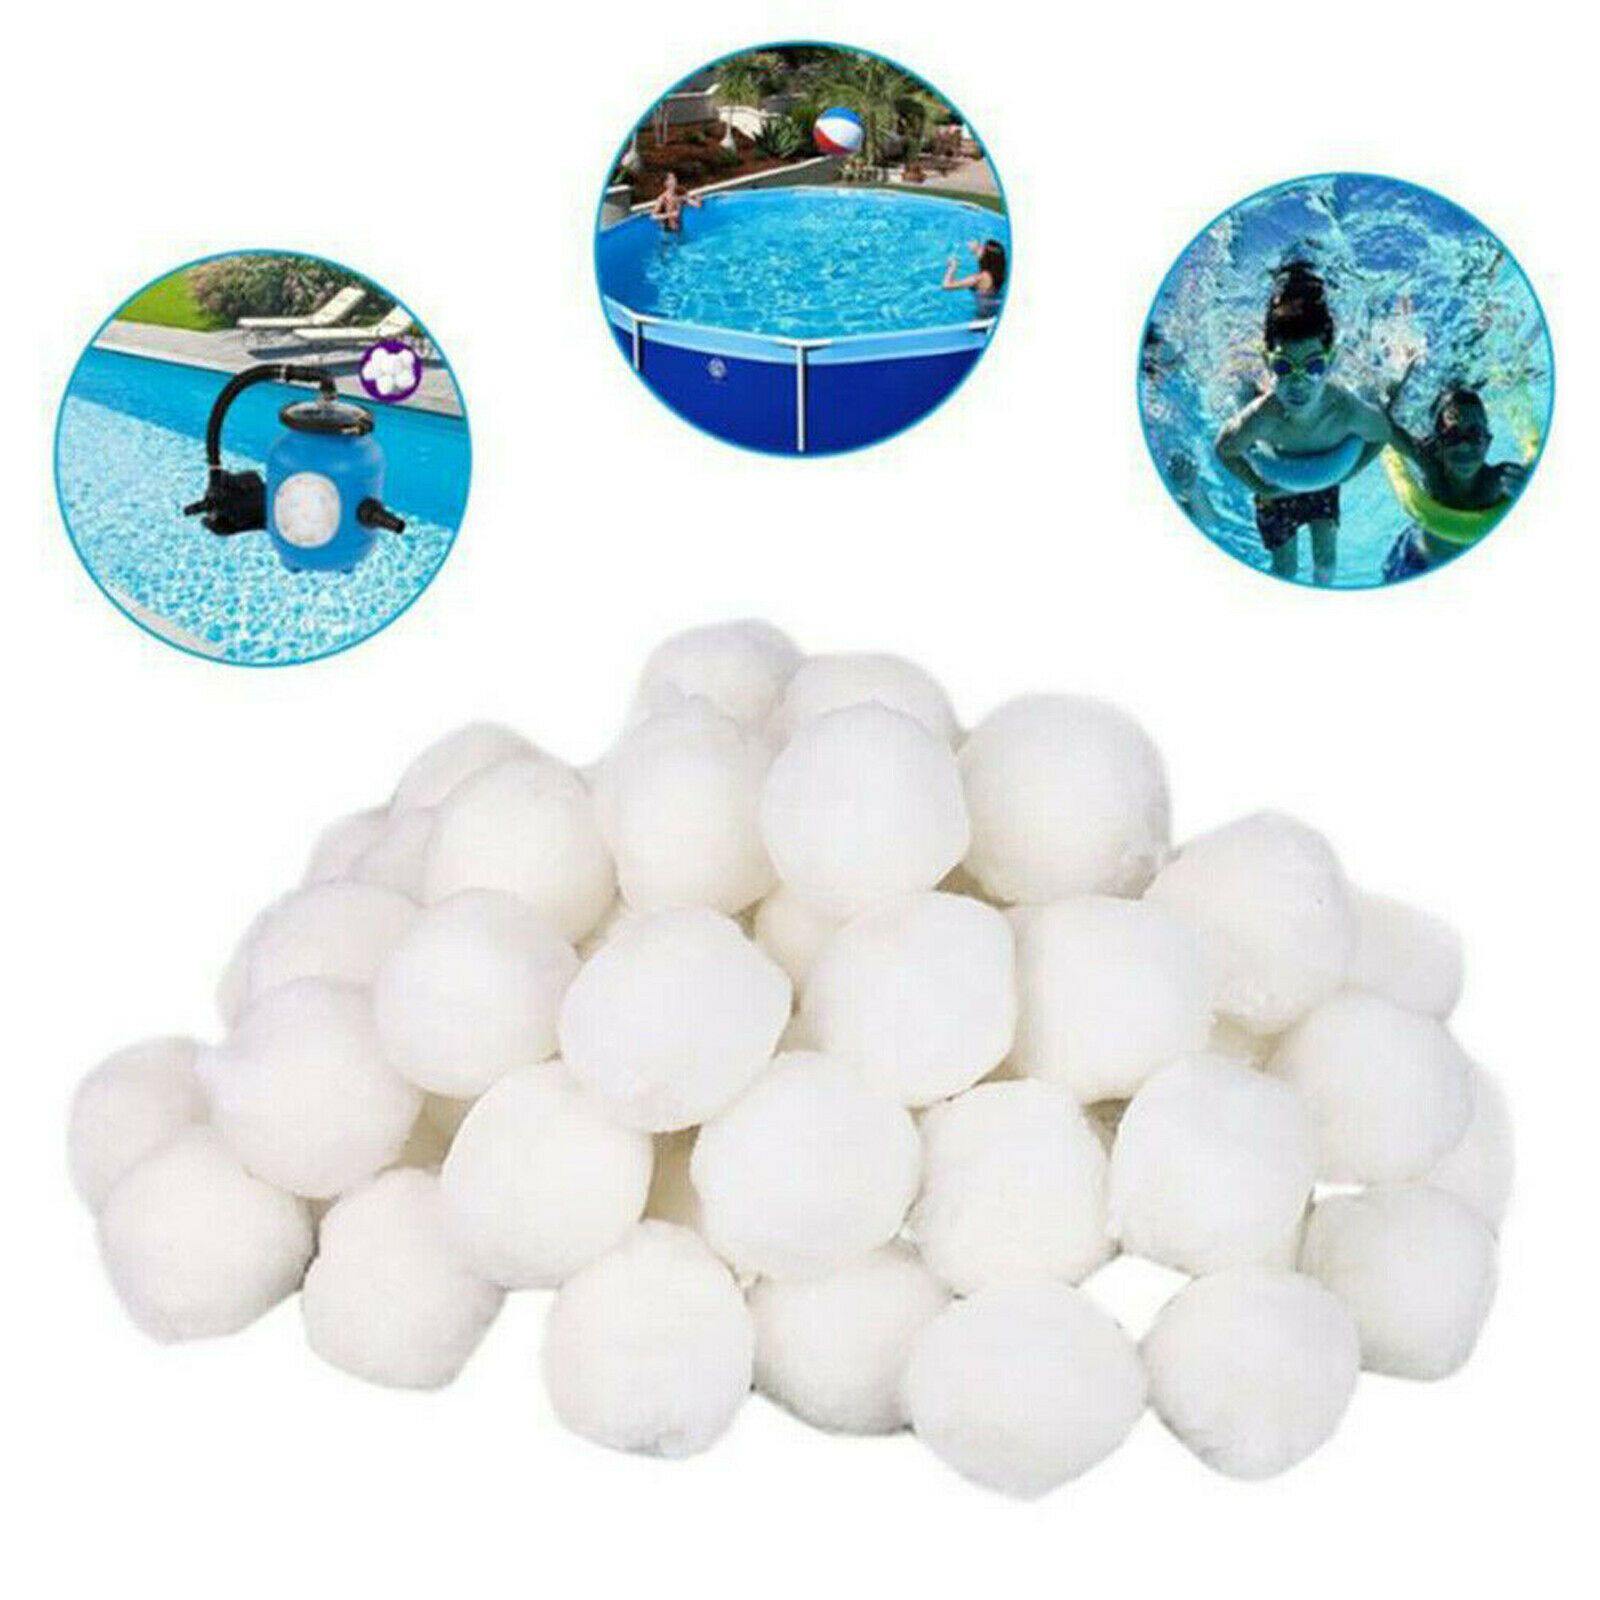 800g Filter Balls Water Purification Fiber Ball Filter Deoiling Swimming Clean Sparesbarn